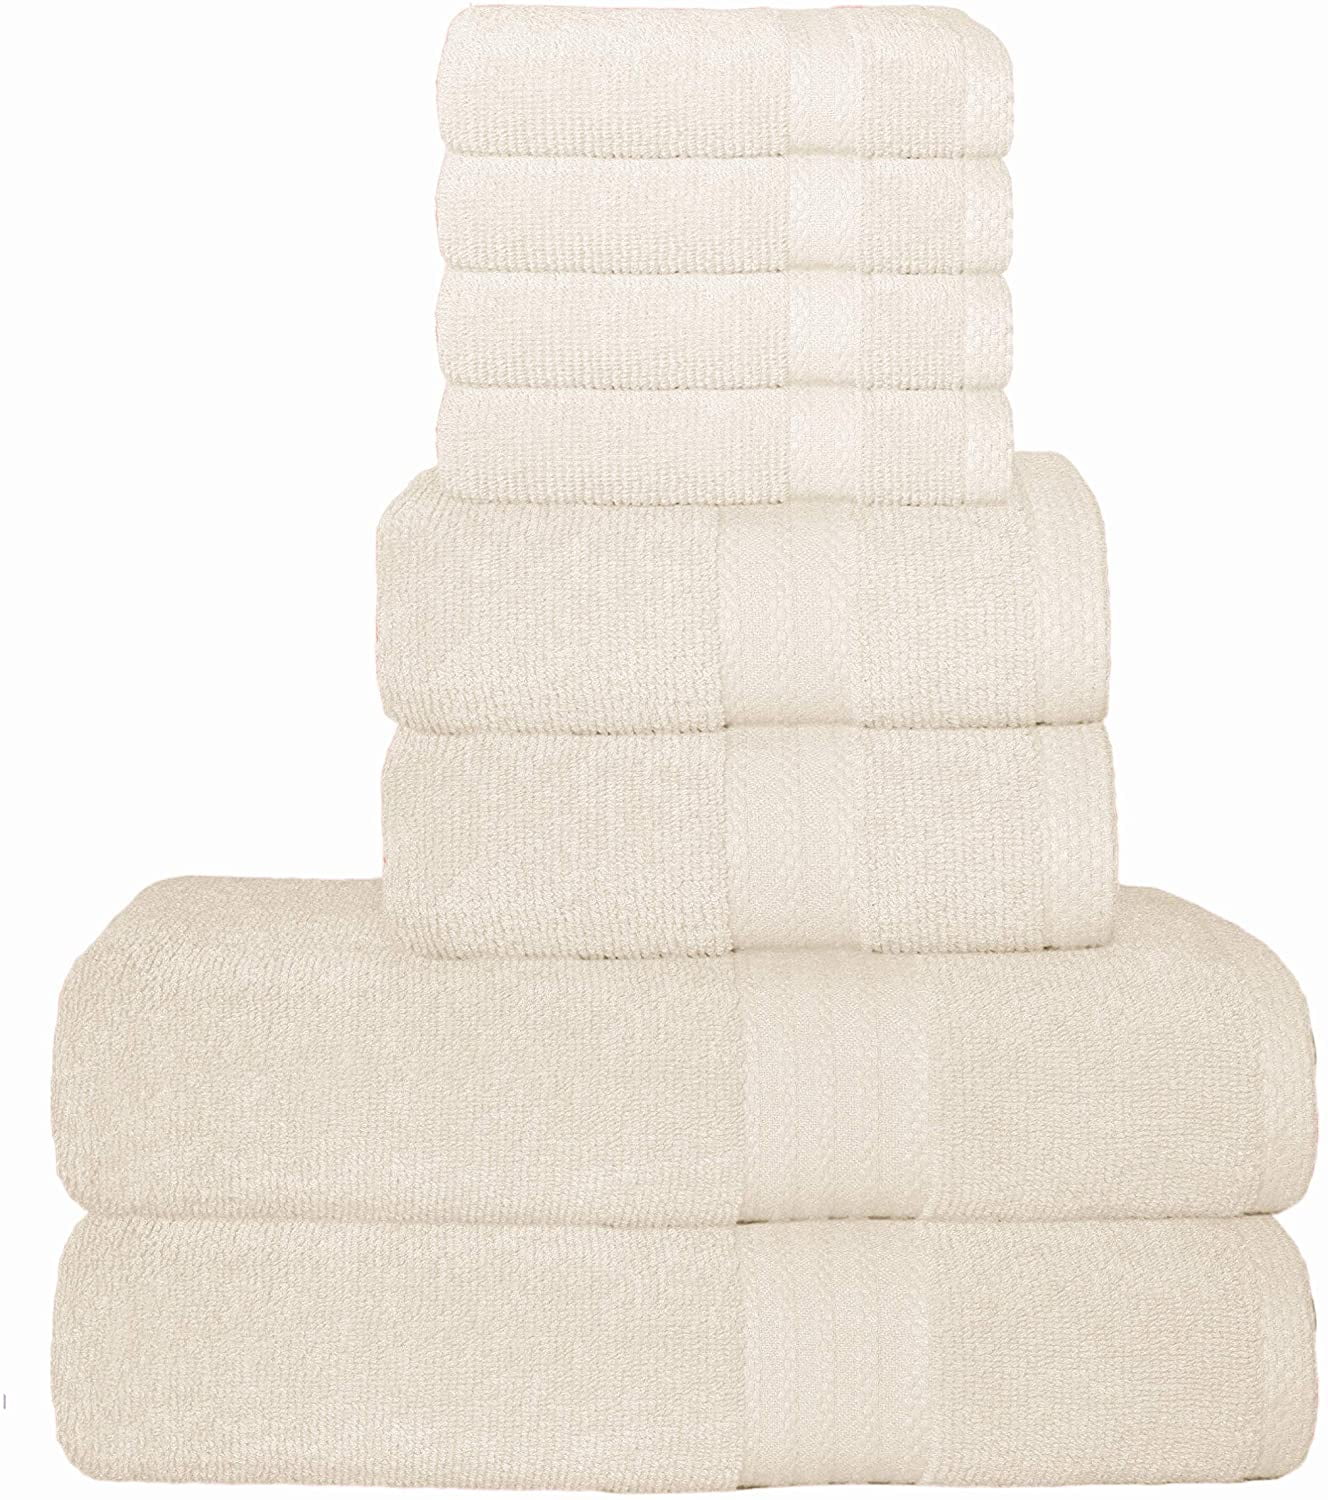 Lavish Home 8 Piece 100% Cotton Plush Bath Towel Set - Bone  27.5x57.25x0.25